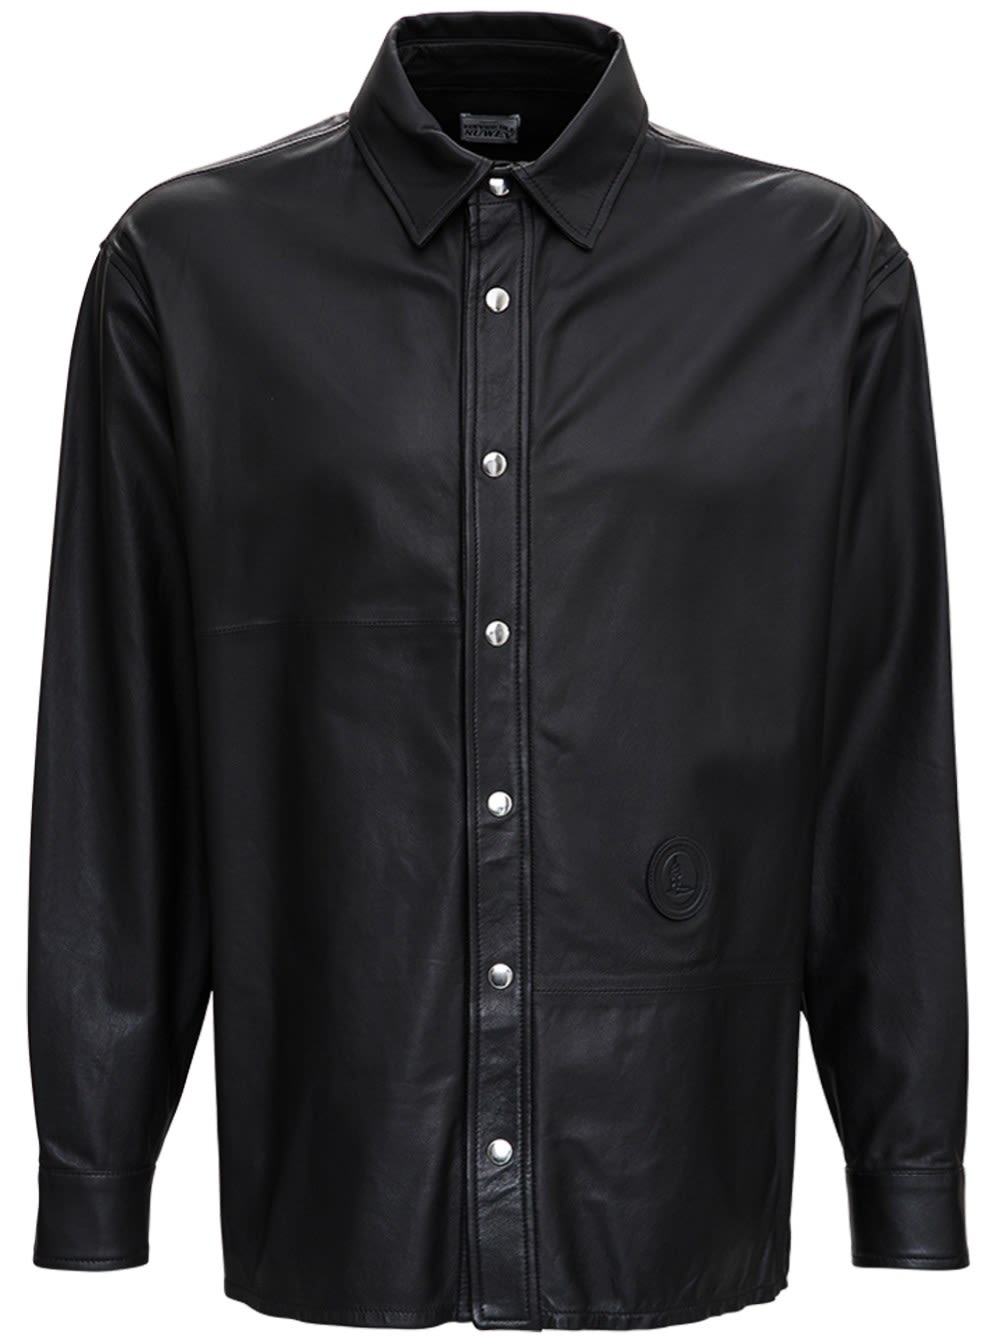 Trussardi Black Leather Shirt